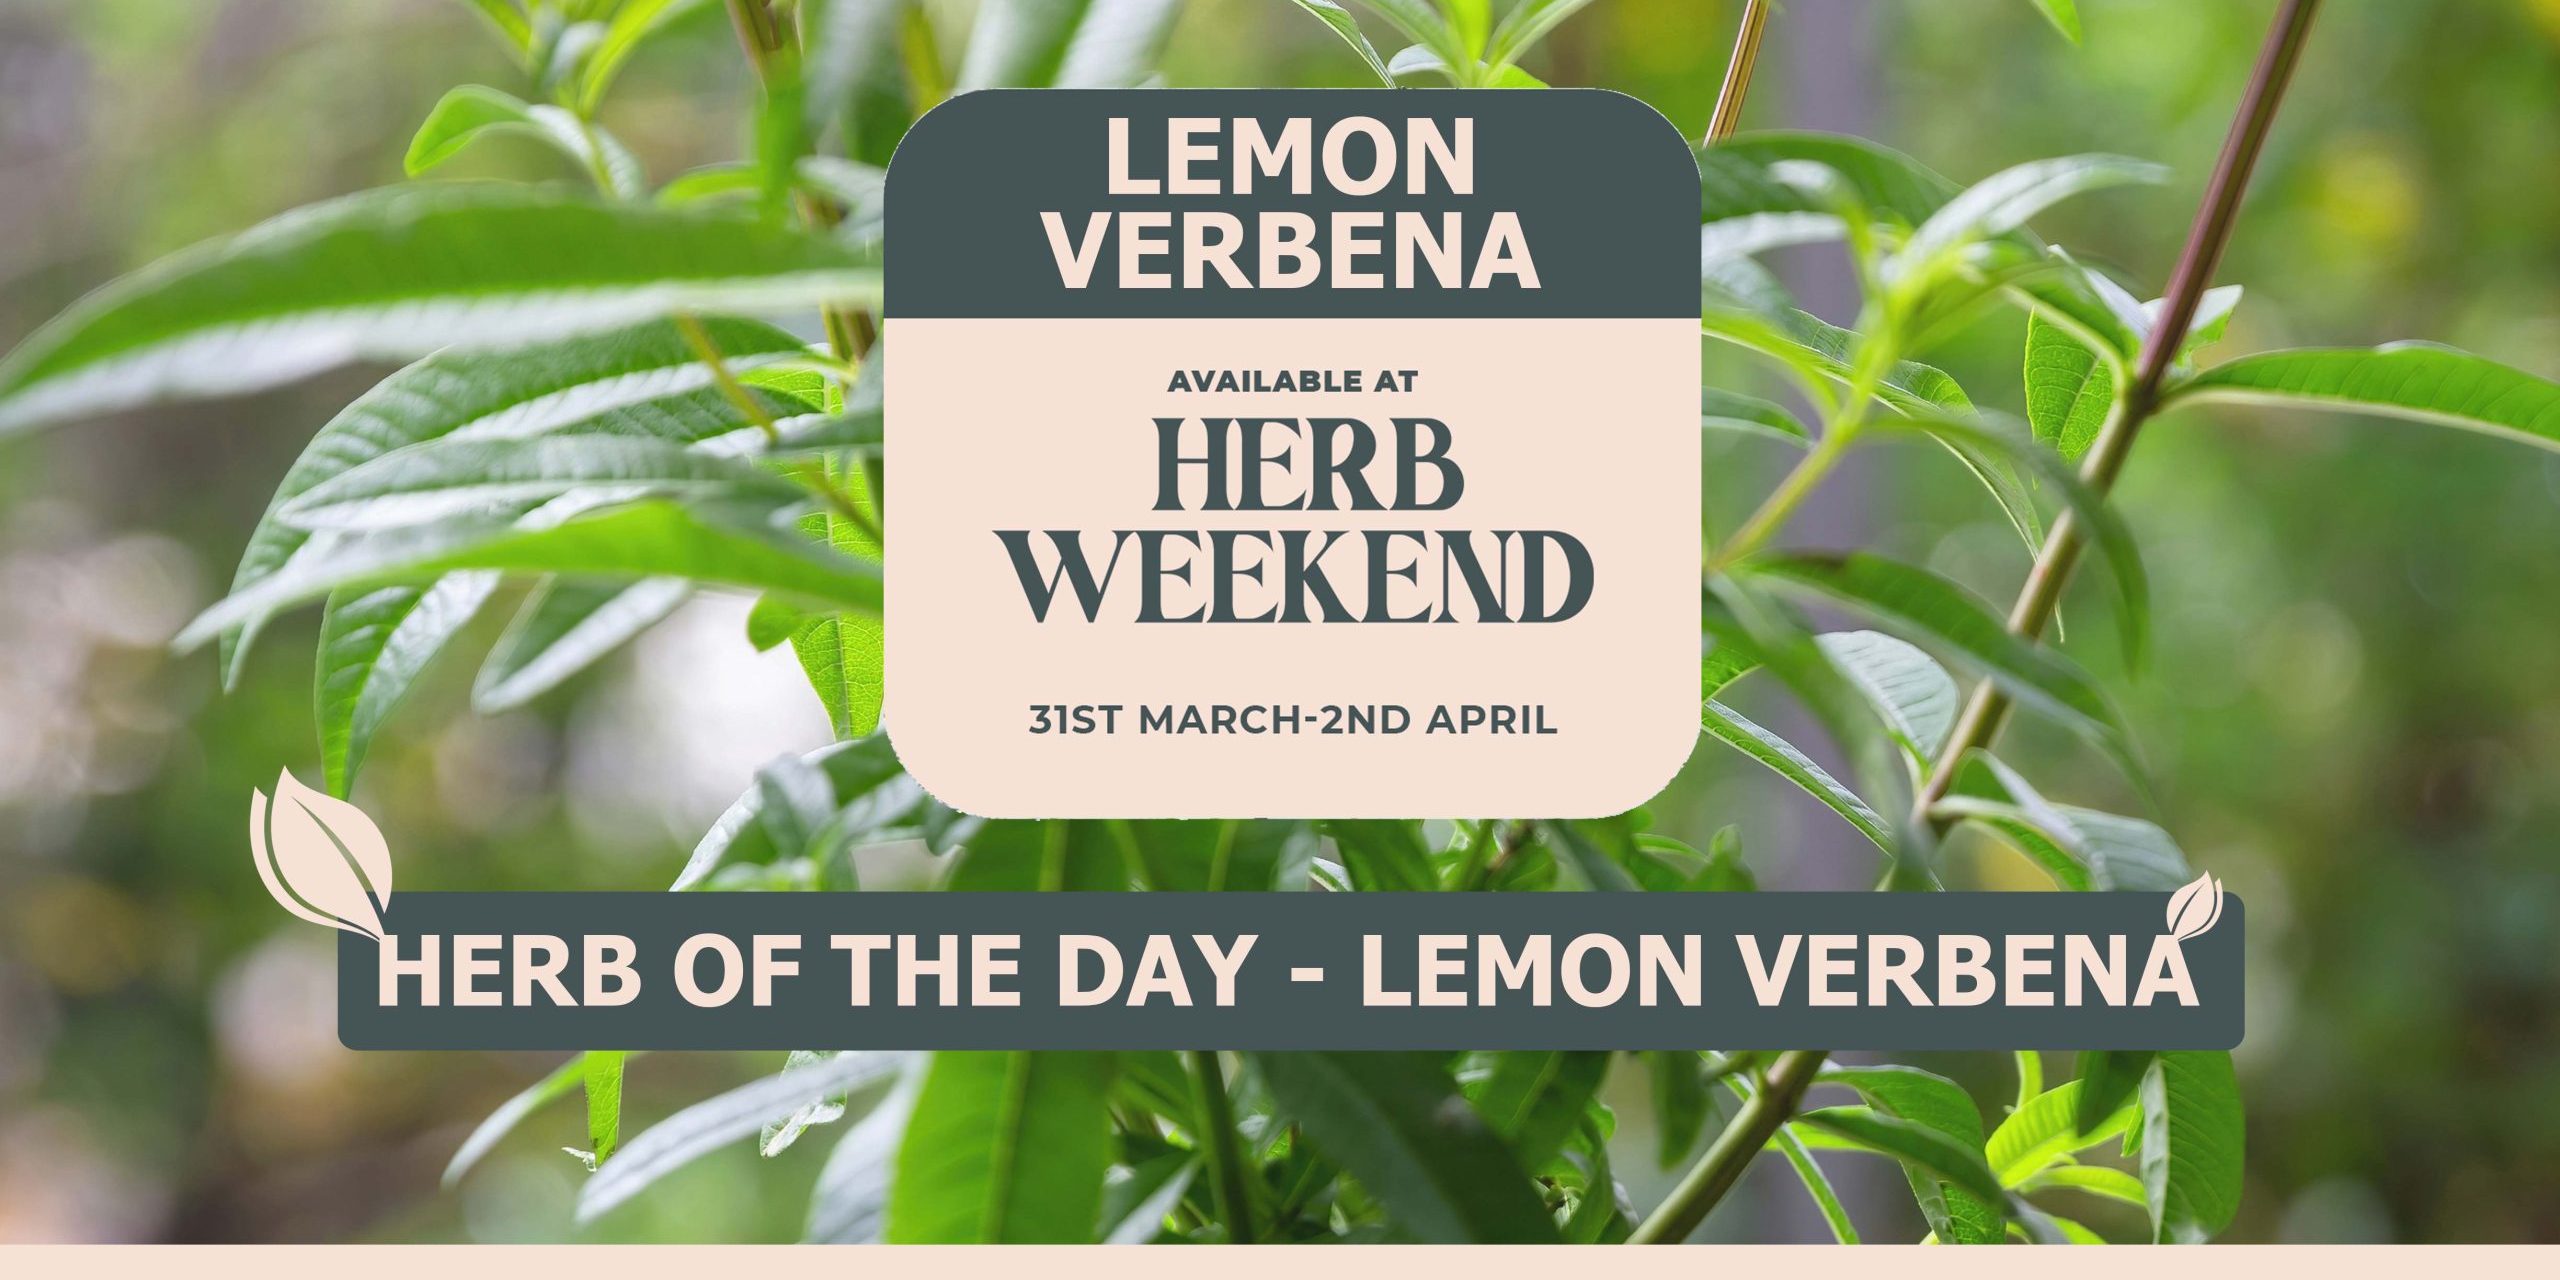 Lemon Verbena - Advice From The Herb Lady